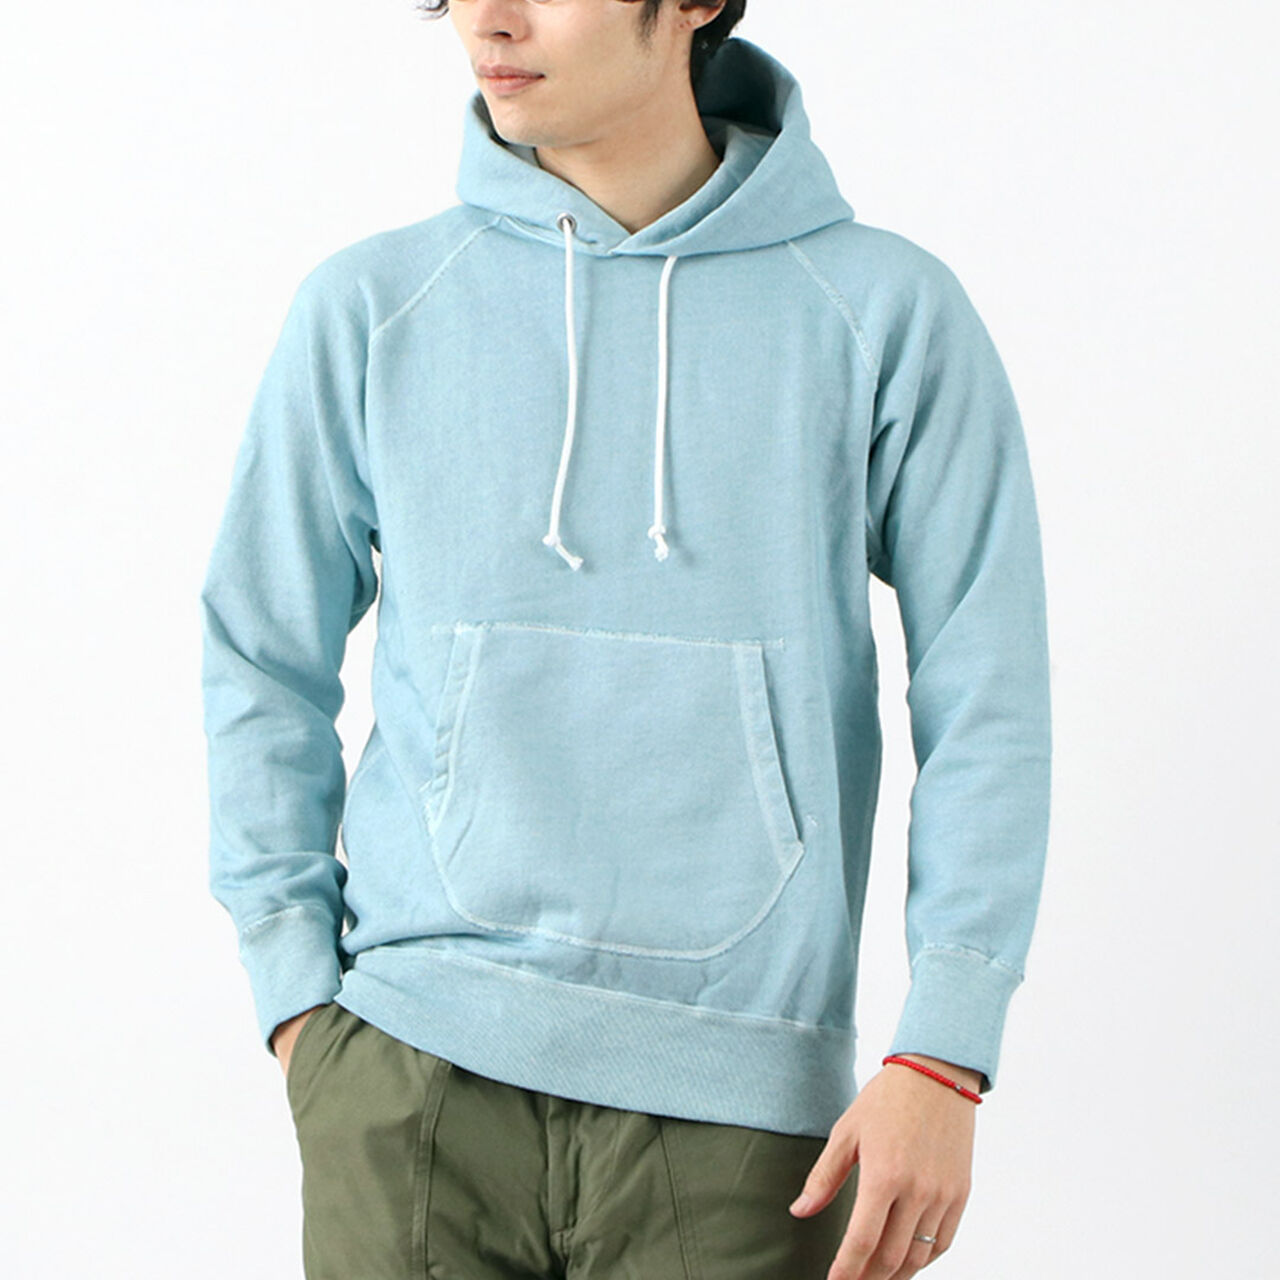 Color Special Order Raglan Pullover Hooded Sweatshirt,P-Soda, large image number 0